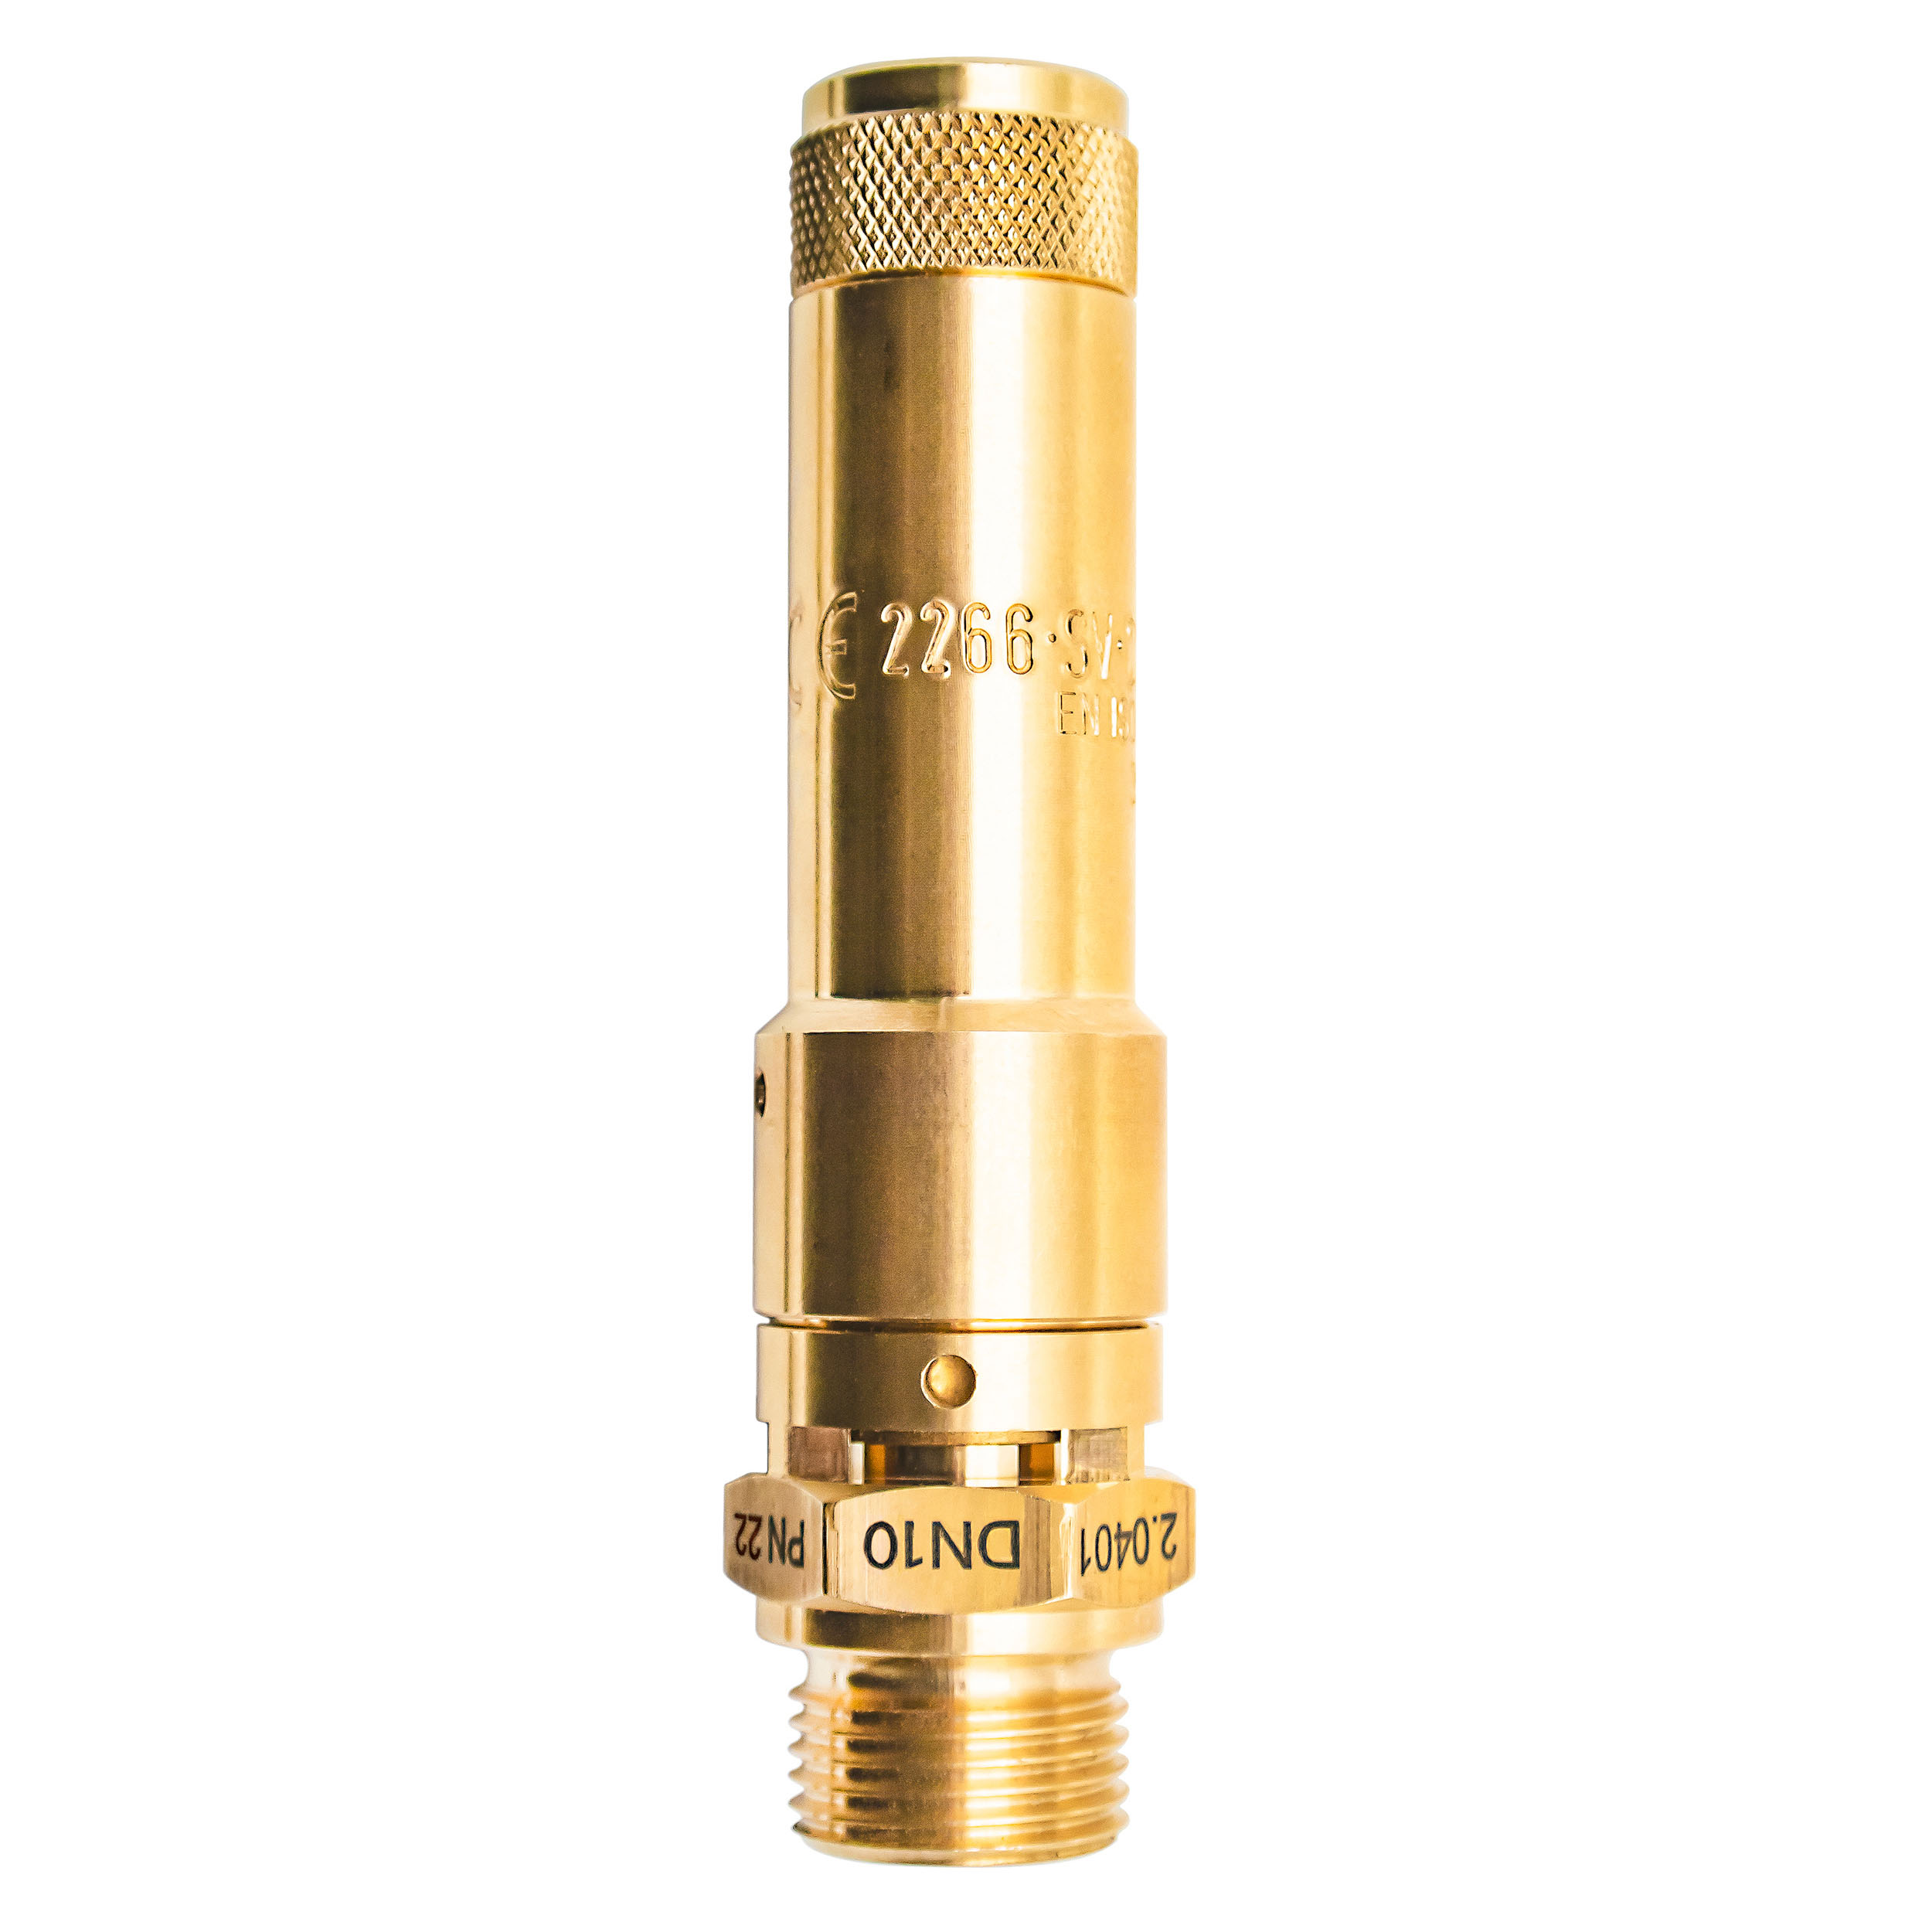 Component-tested safety valve DN 10, G¾, pressure: 11.6-16 bar